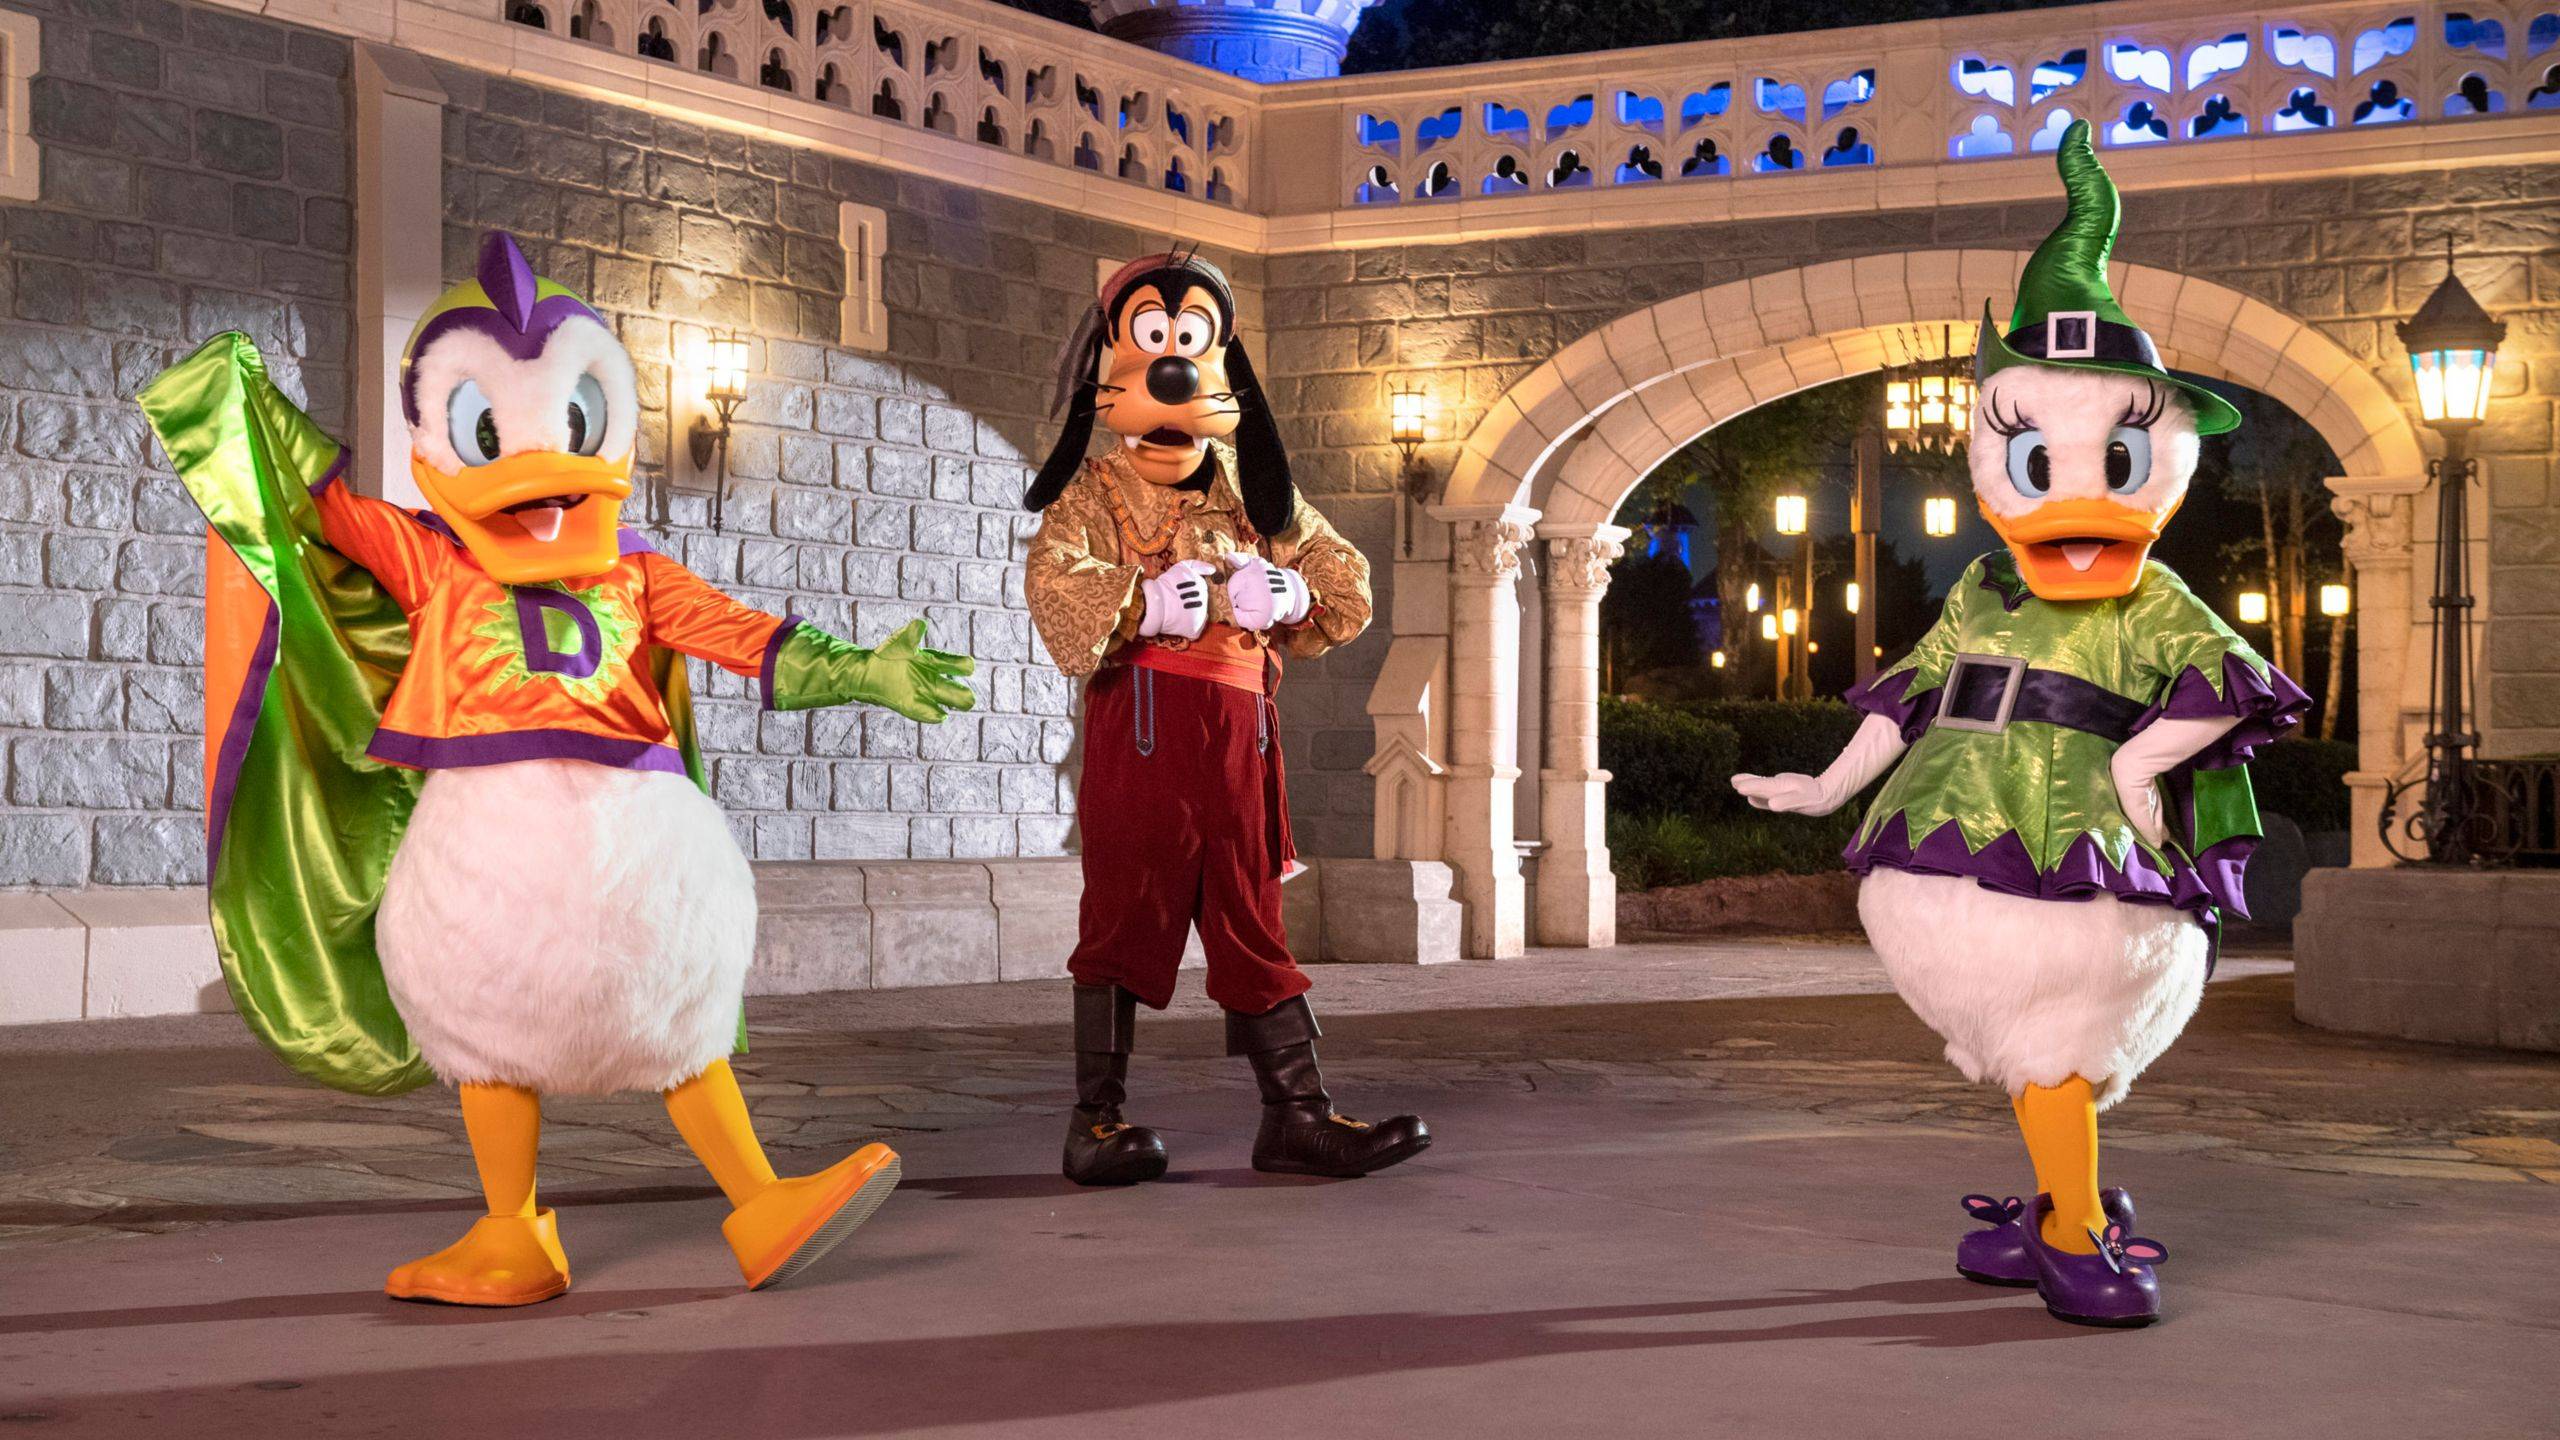 Disney teases upcoming announcement of plans for Walt Disney World Halloween Party season